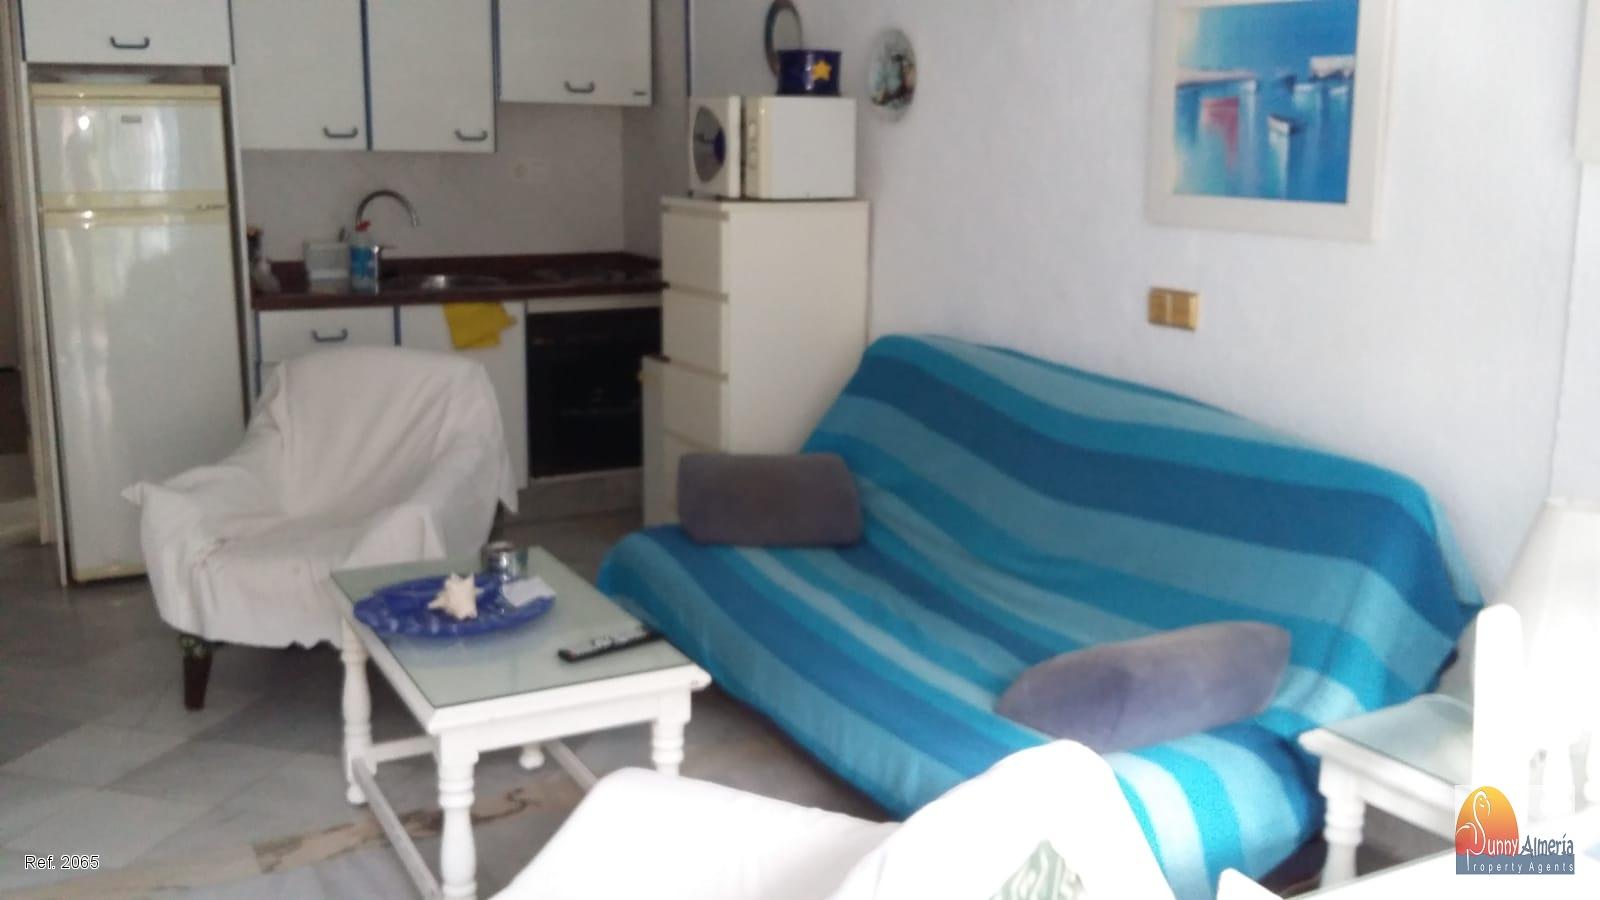 Apartment for rent in Avenida Entremares 112 (Roquetas de Mar), 700 €/month